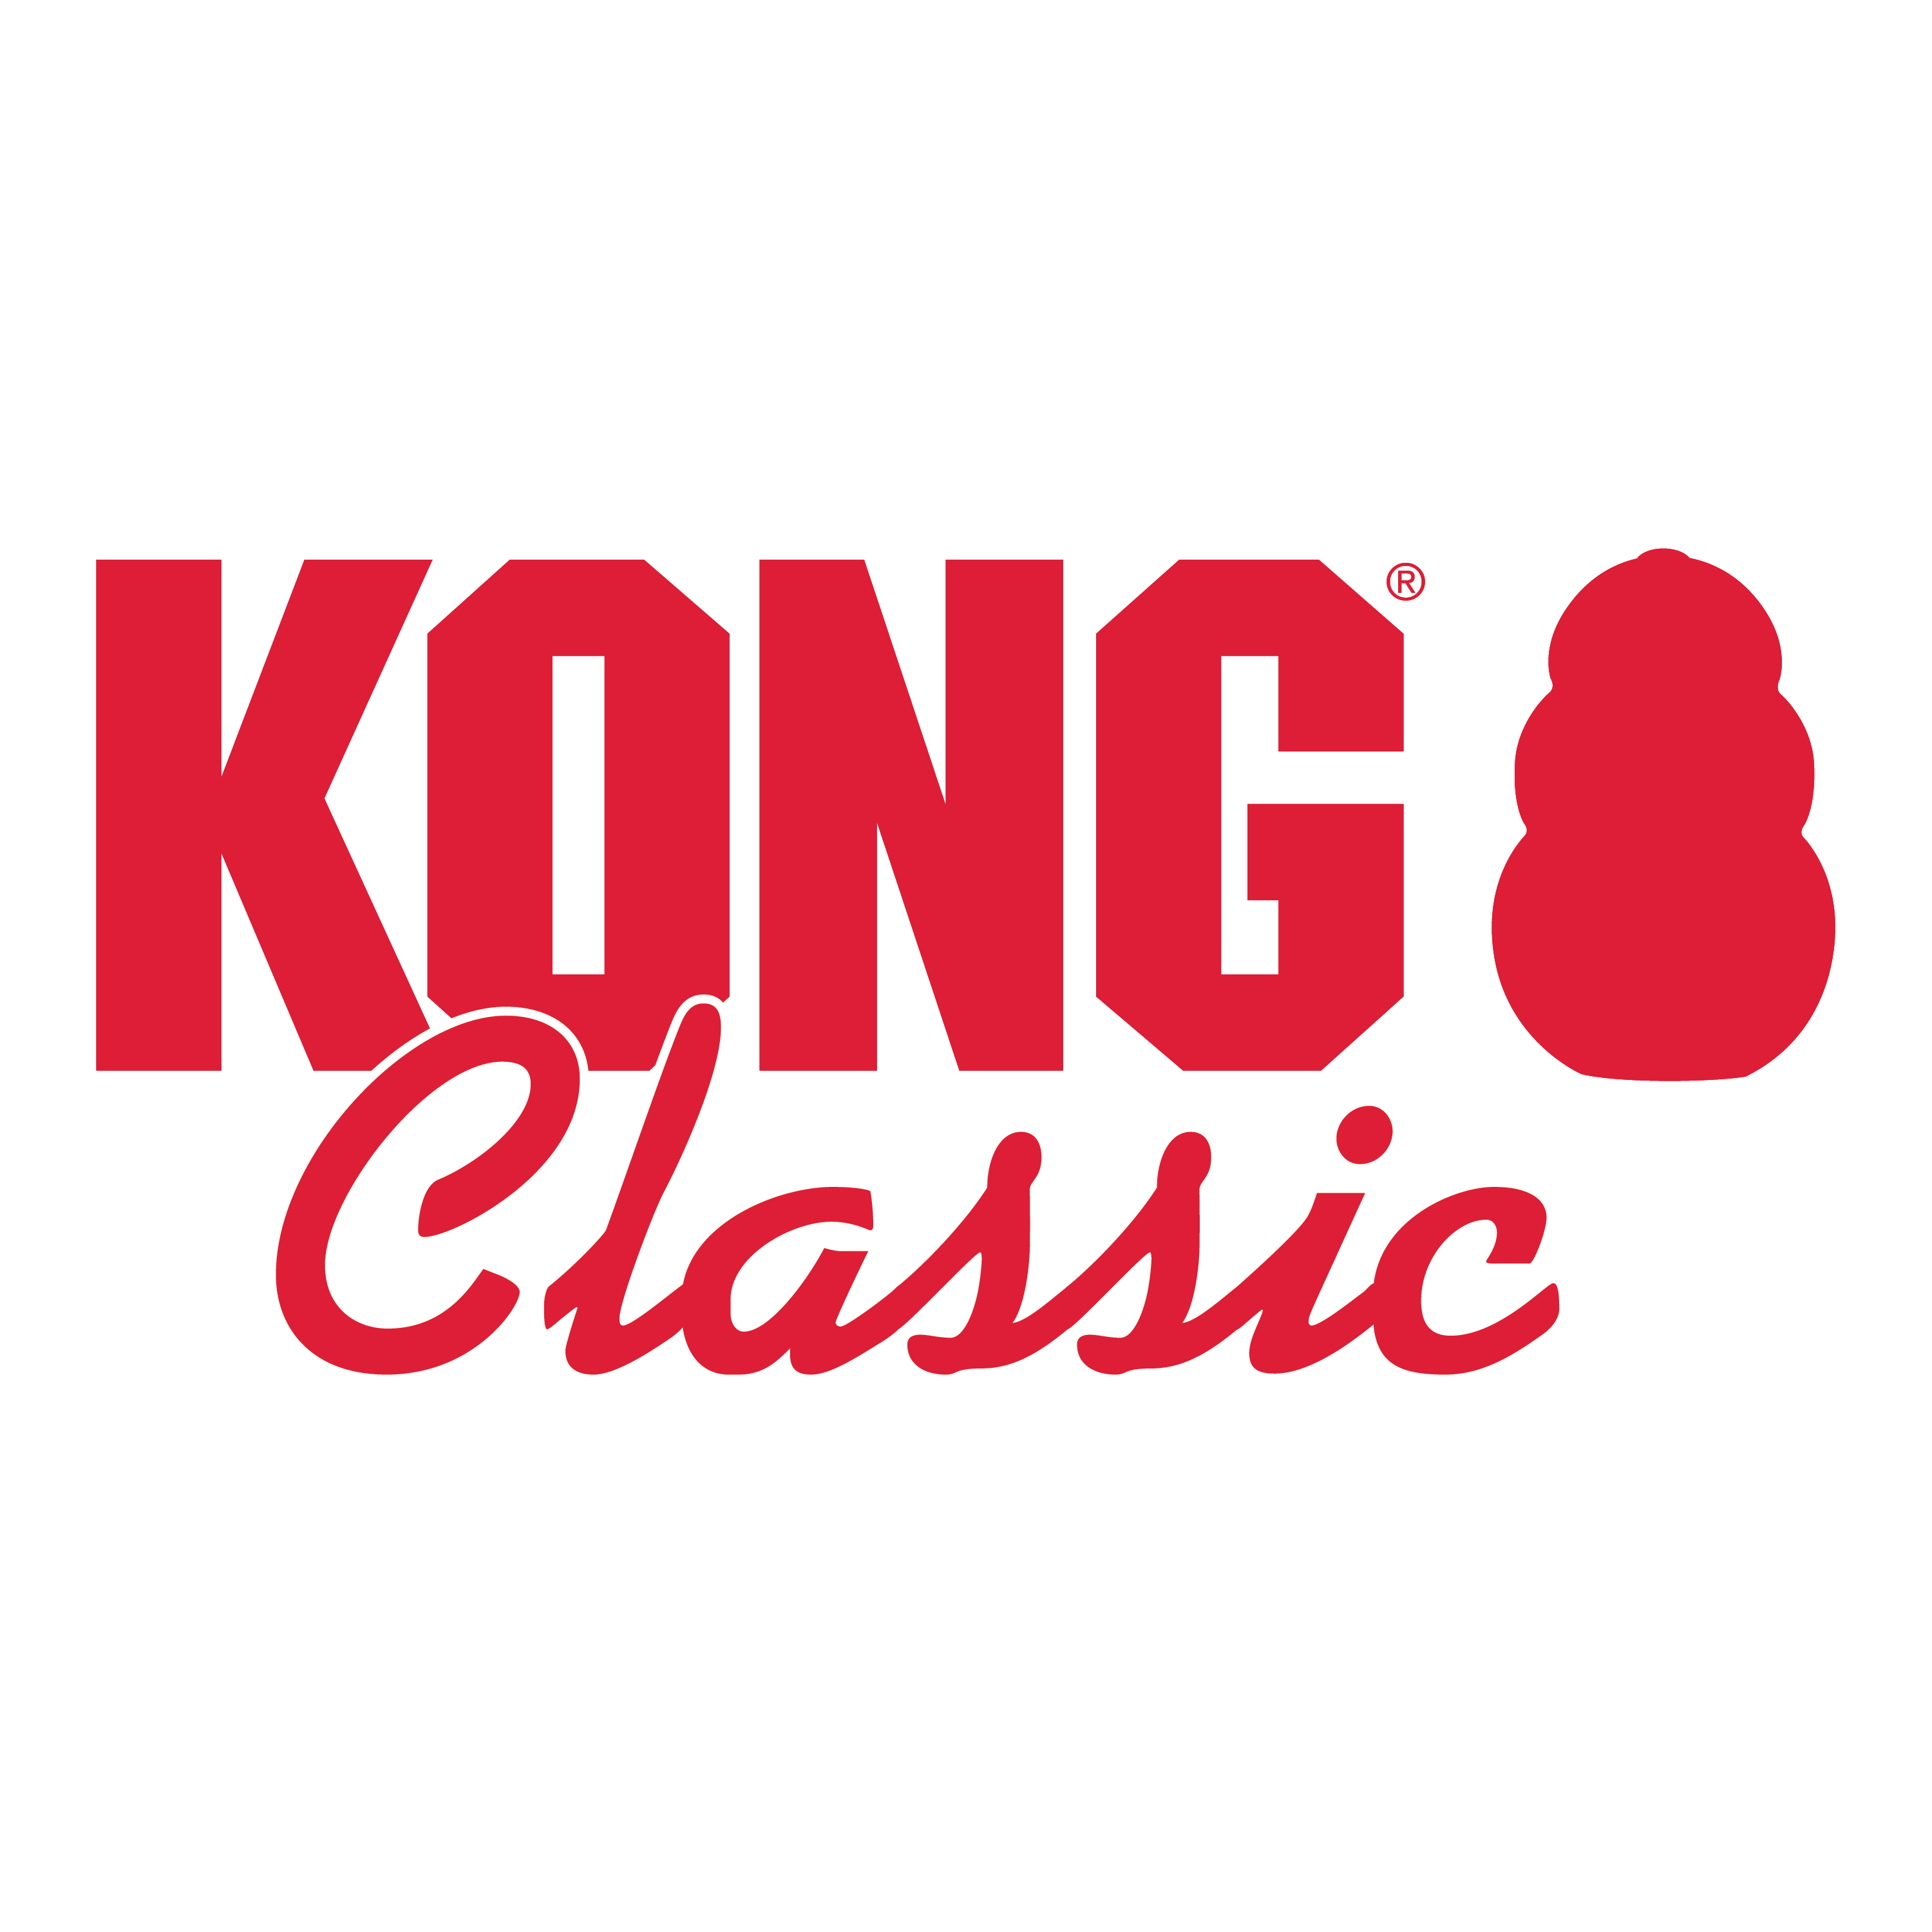 KONG Classic alt4 product image